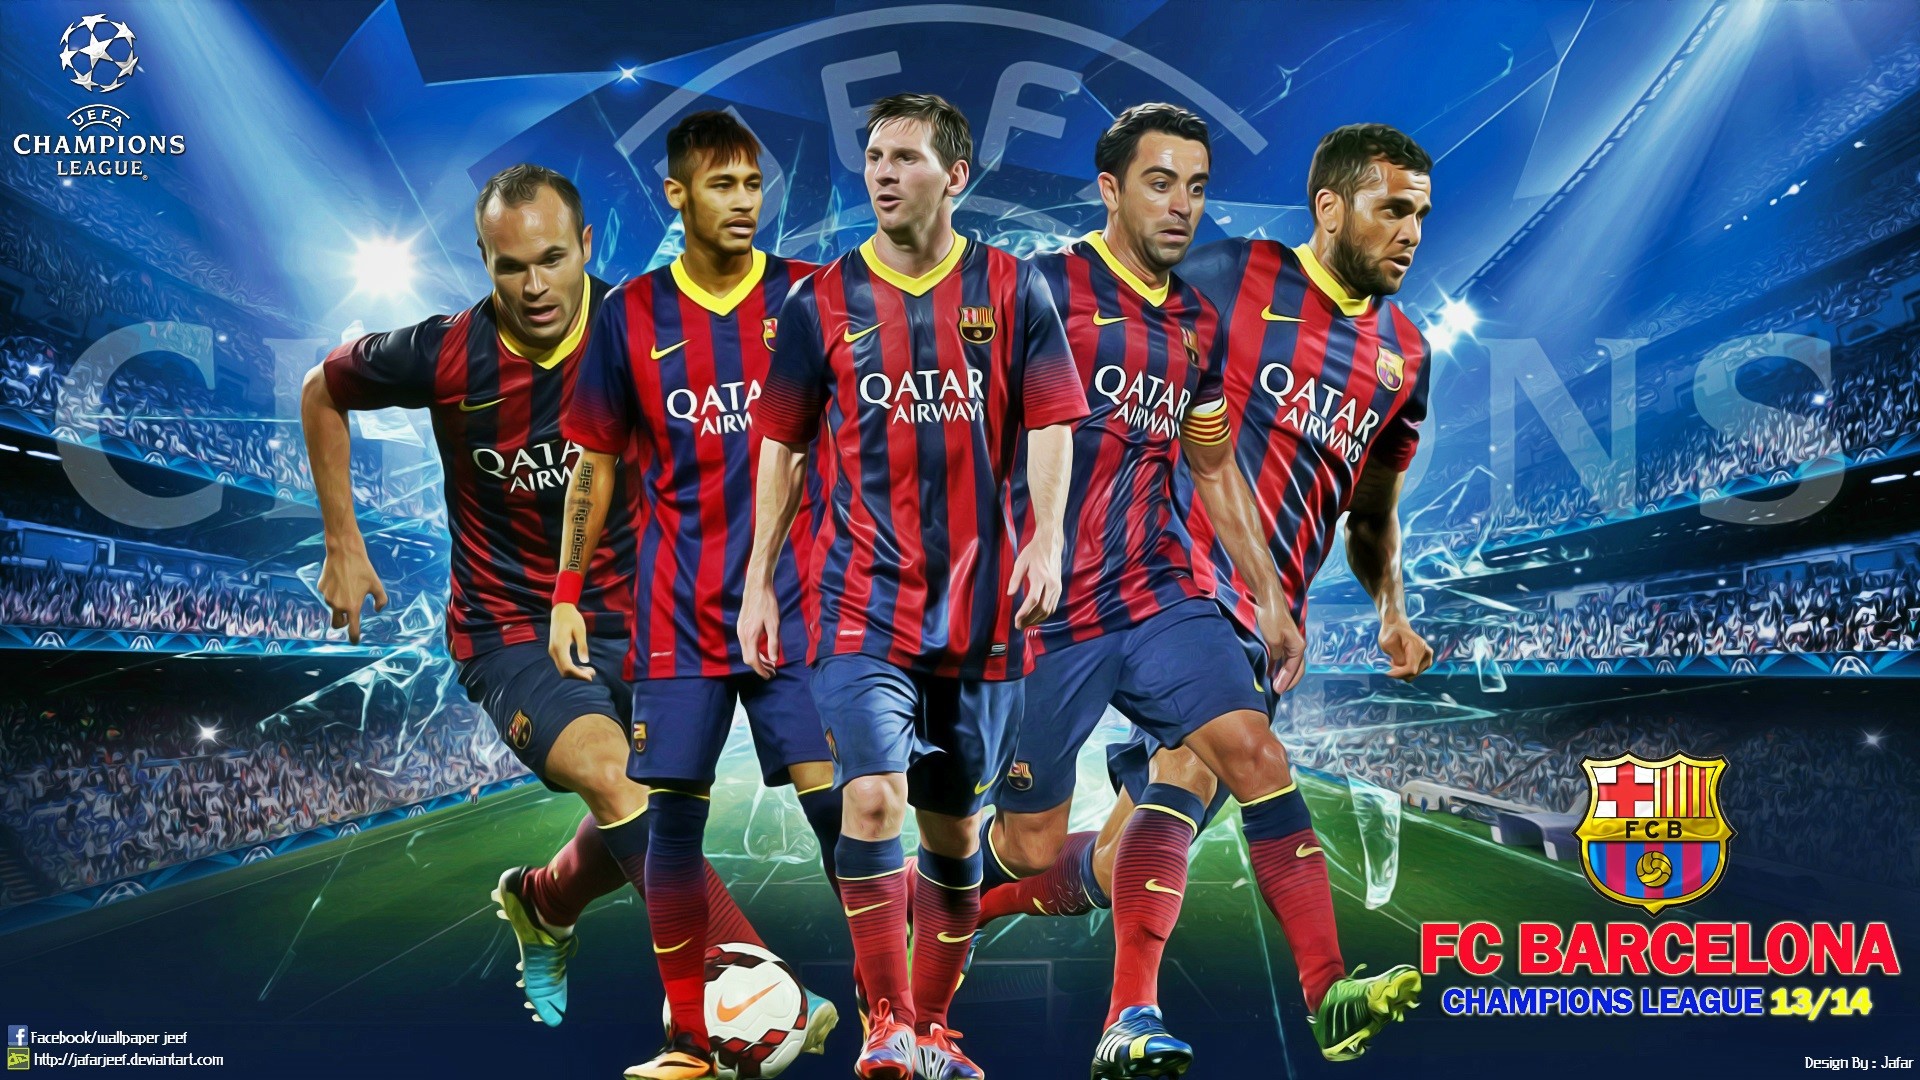 Uefa Champions League Wallpaper HD (72+ images)